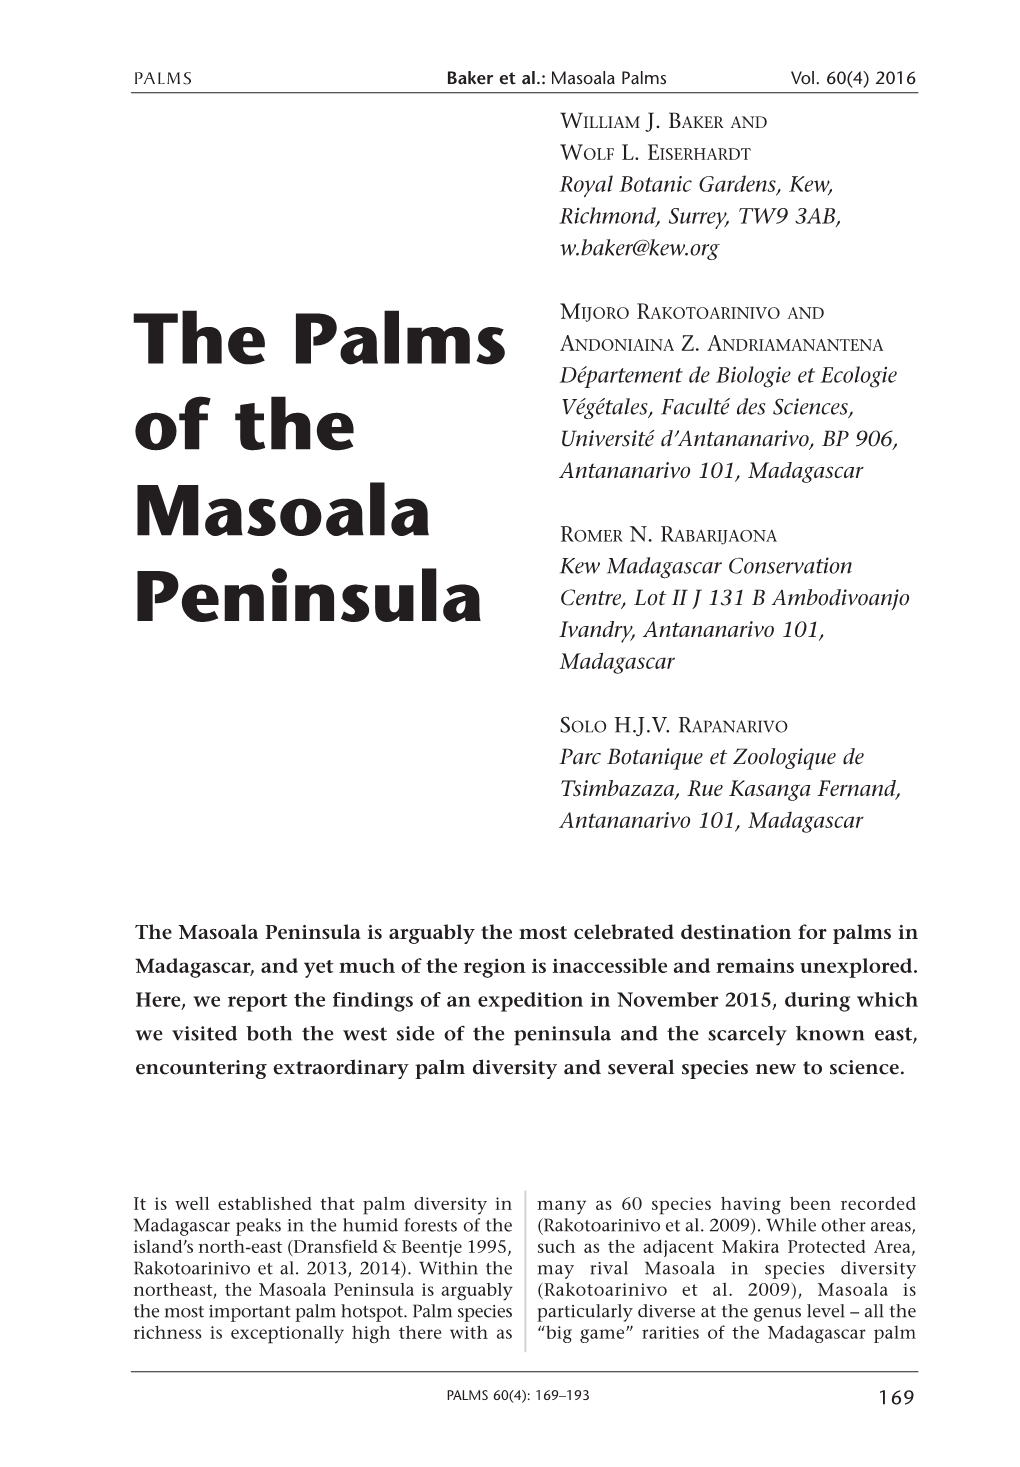 The Palms of the Masoala Peninsula